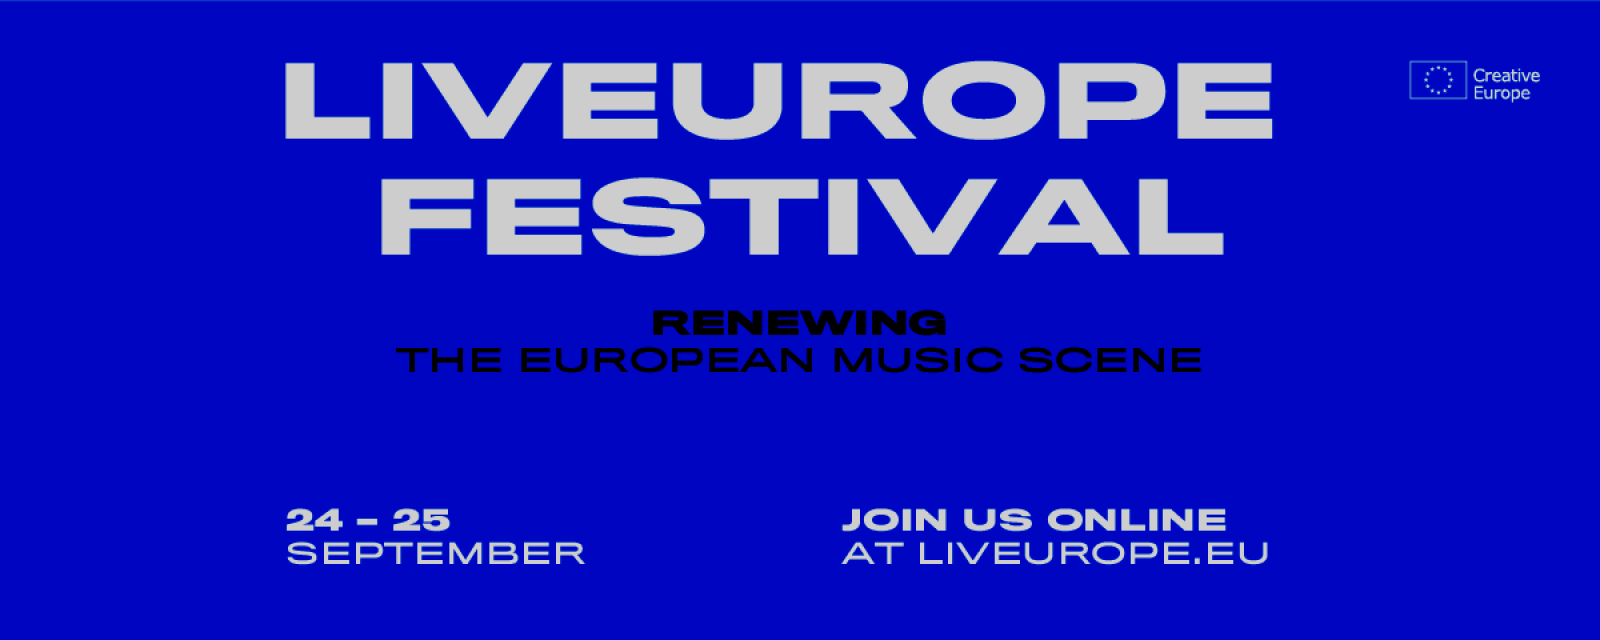 liveurope-festival-2020